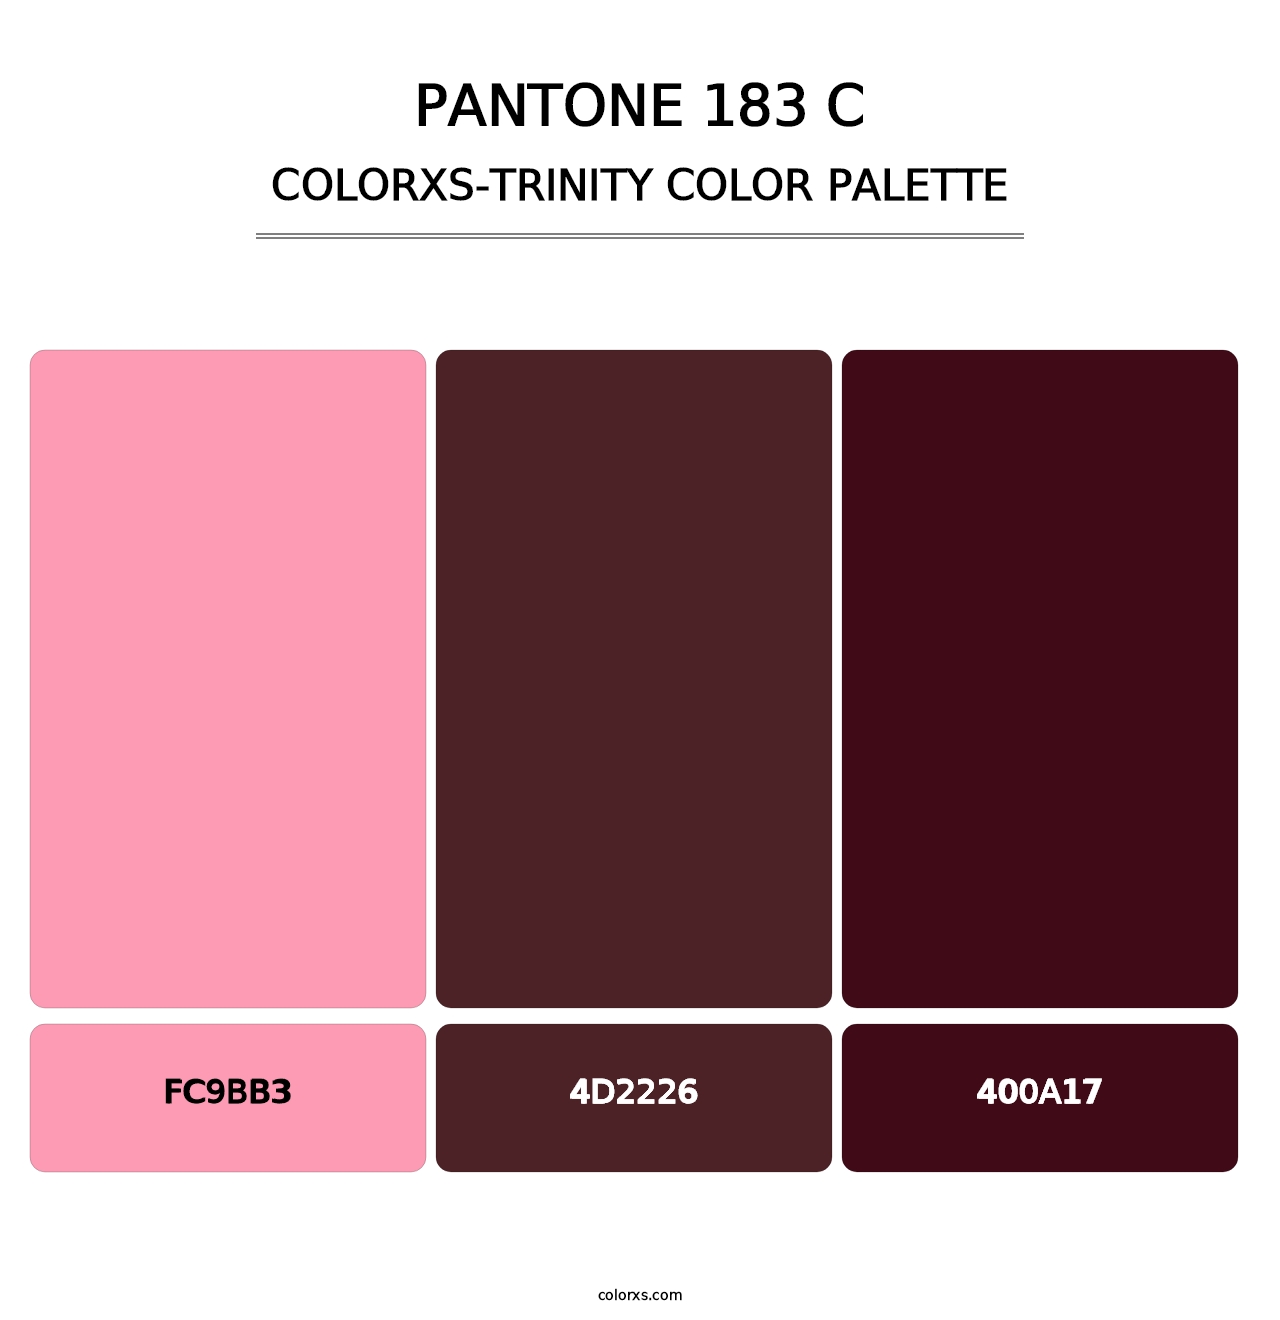 PANTONE 183 C - Colorxs Trinity Palette